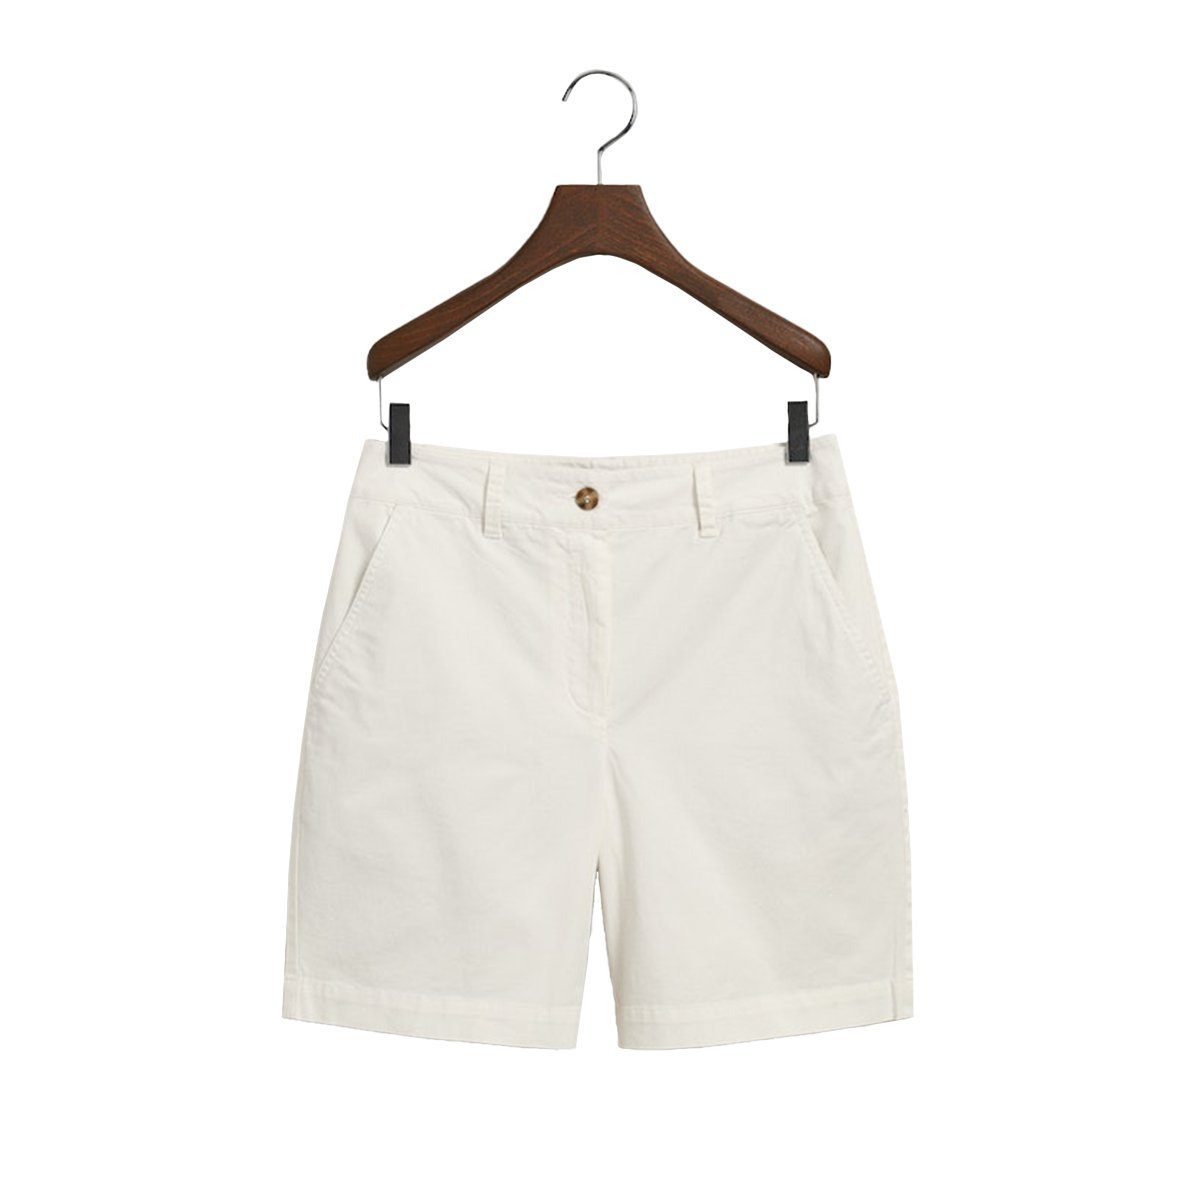 Gant Shorts 4020078 Chino Shorts